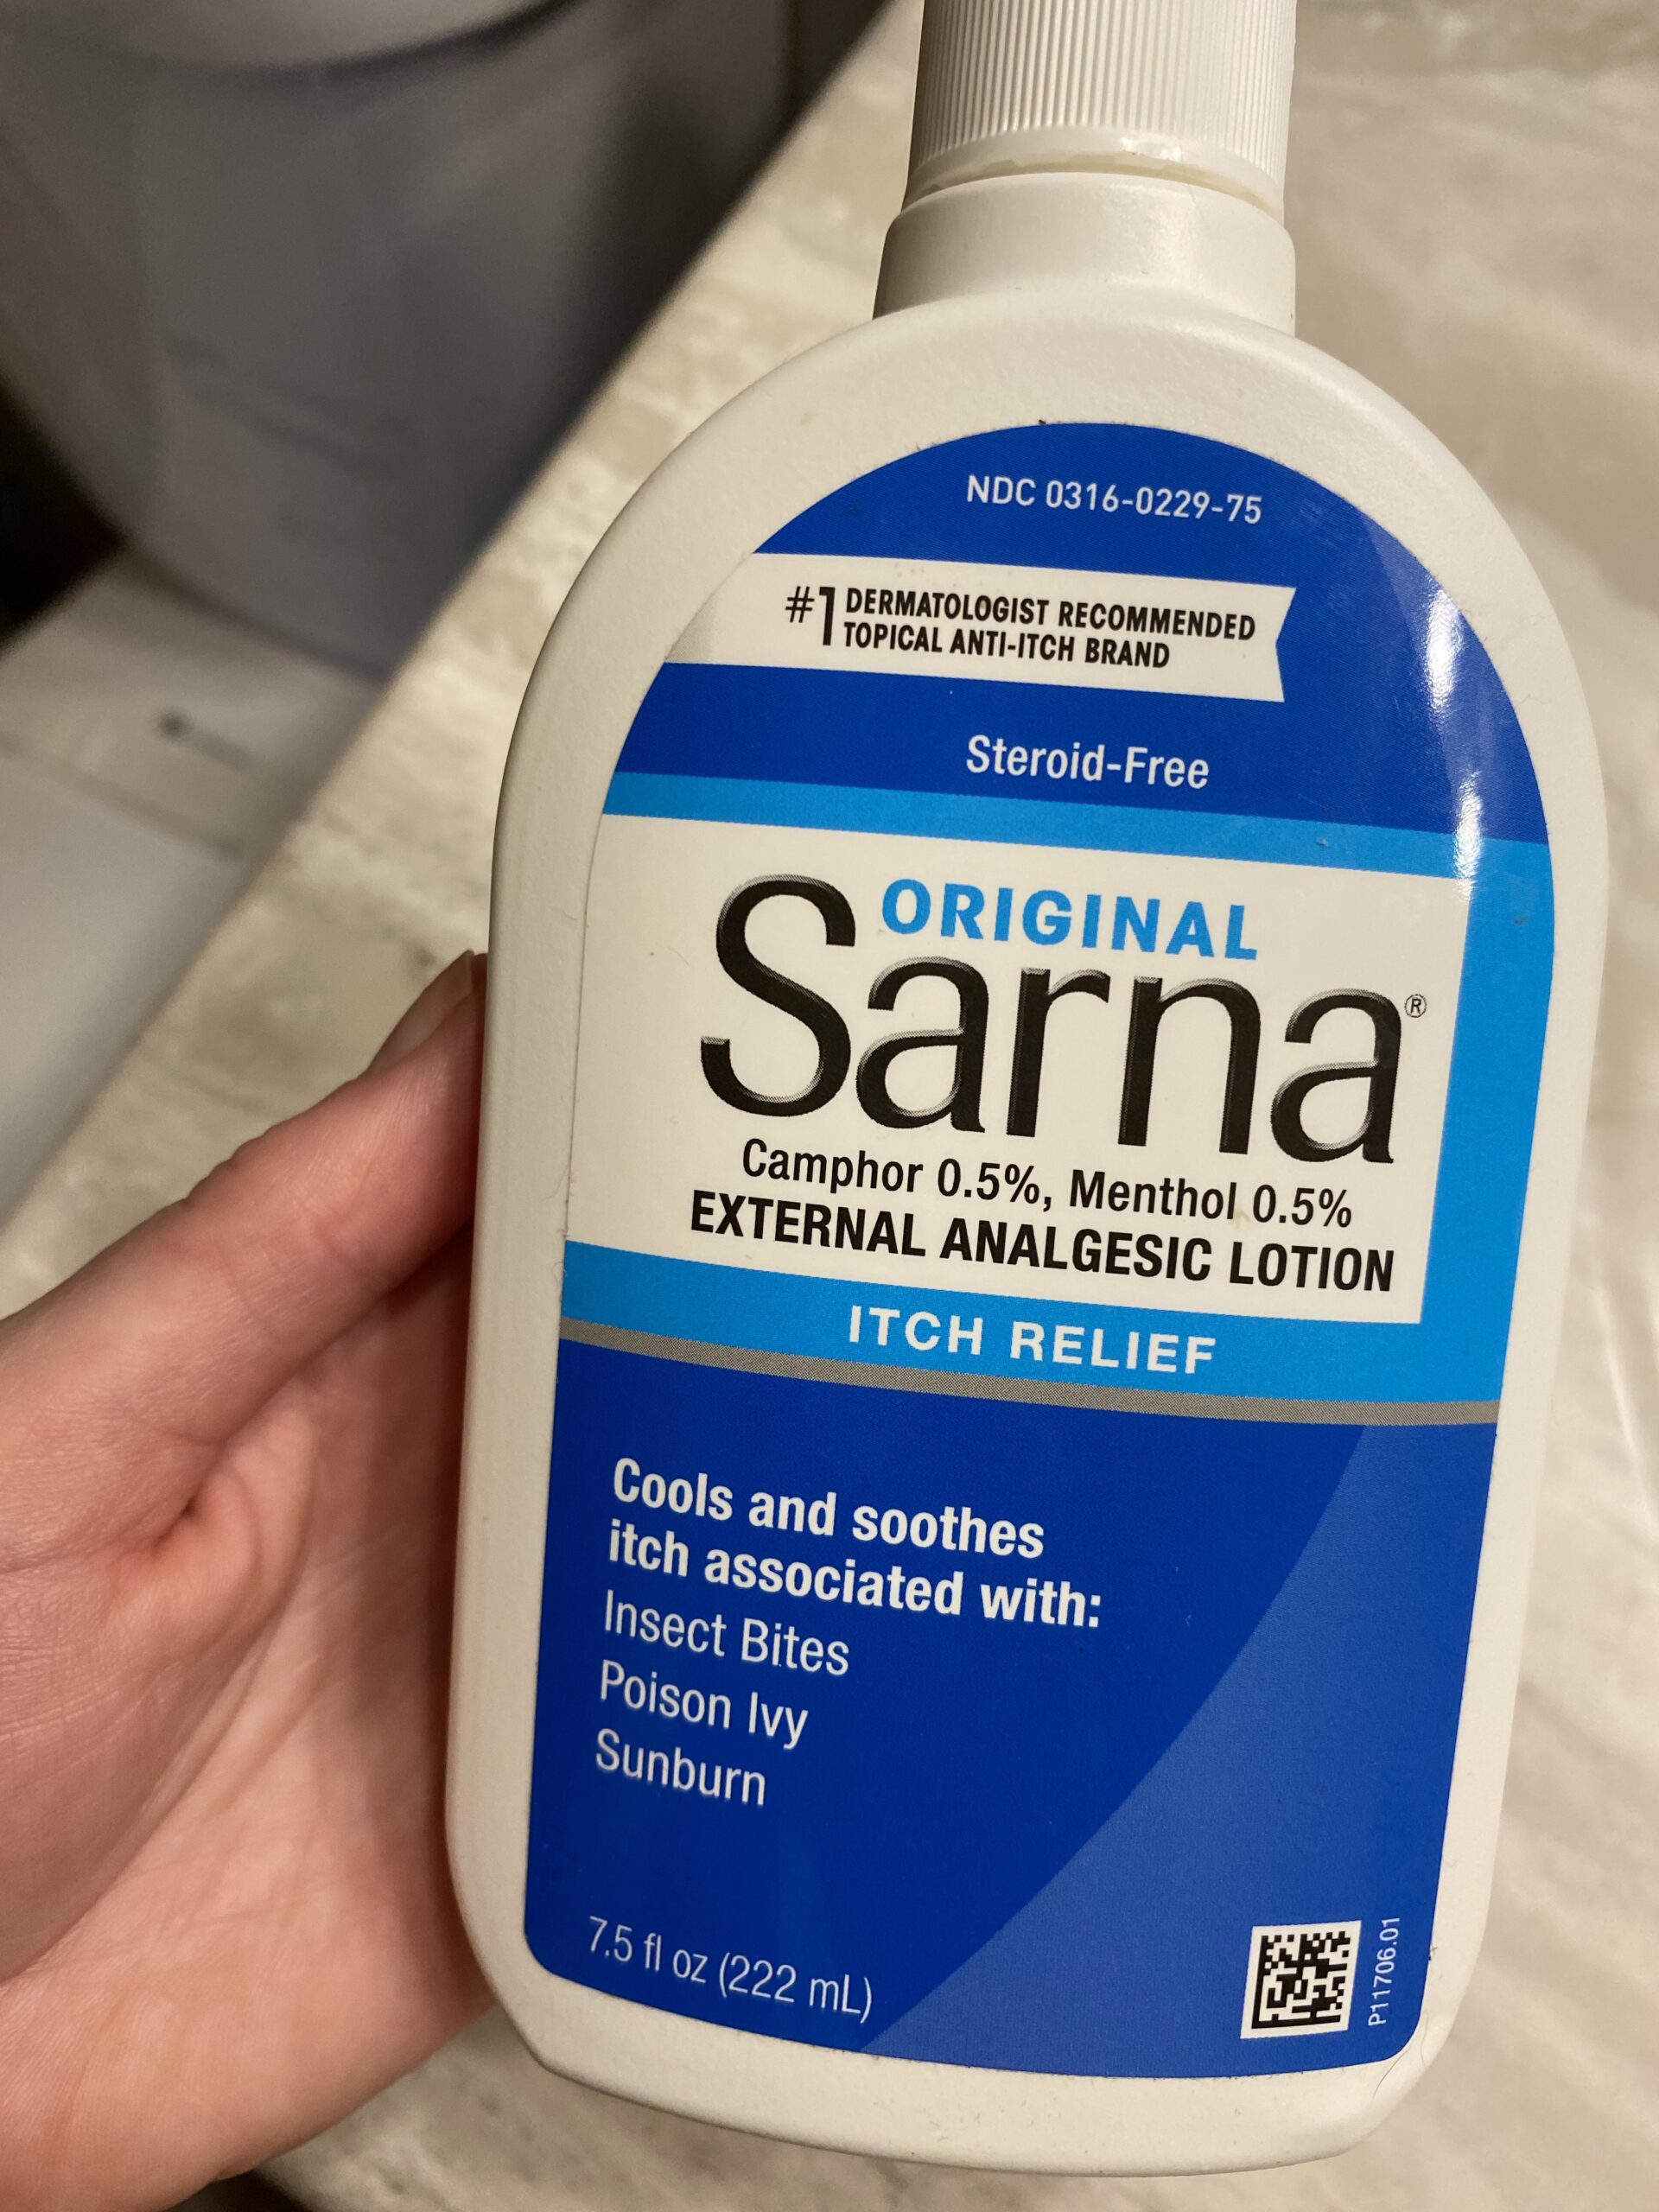 Sarna external analgesic lotion